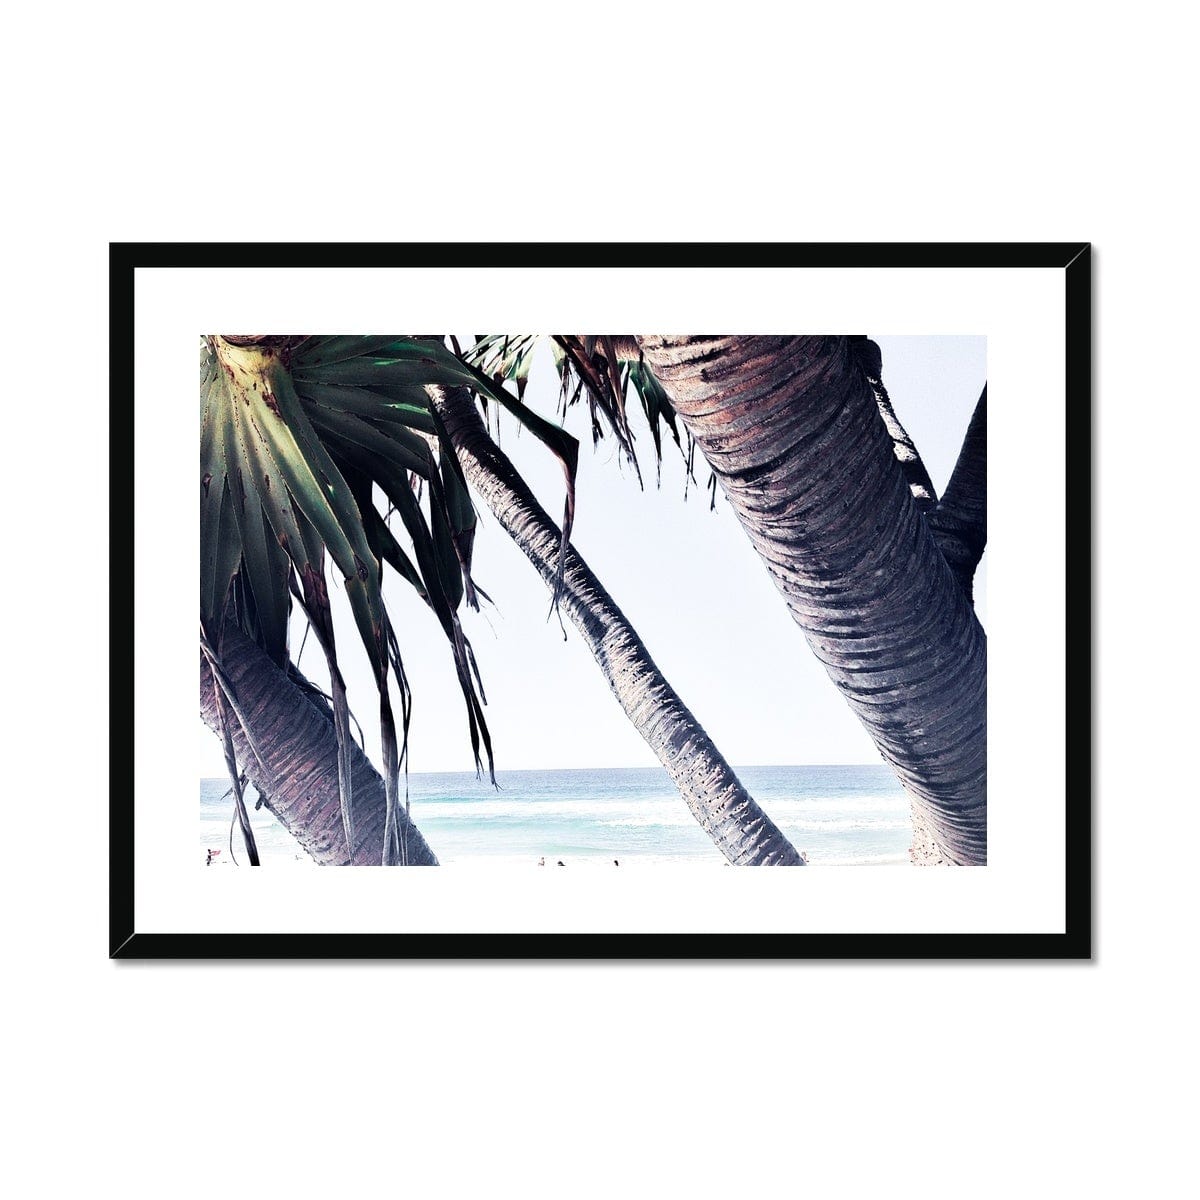 Adam Davies Framed 16"x12" (40.64x30.48cm) / Black Frame Coastal Palms Framed Print